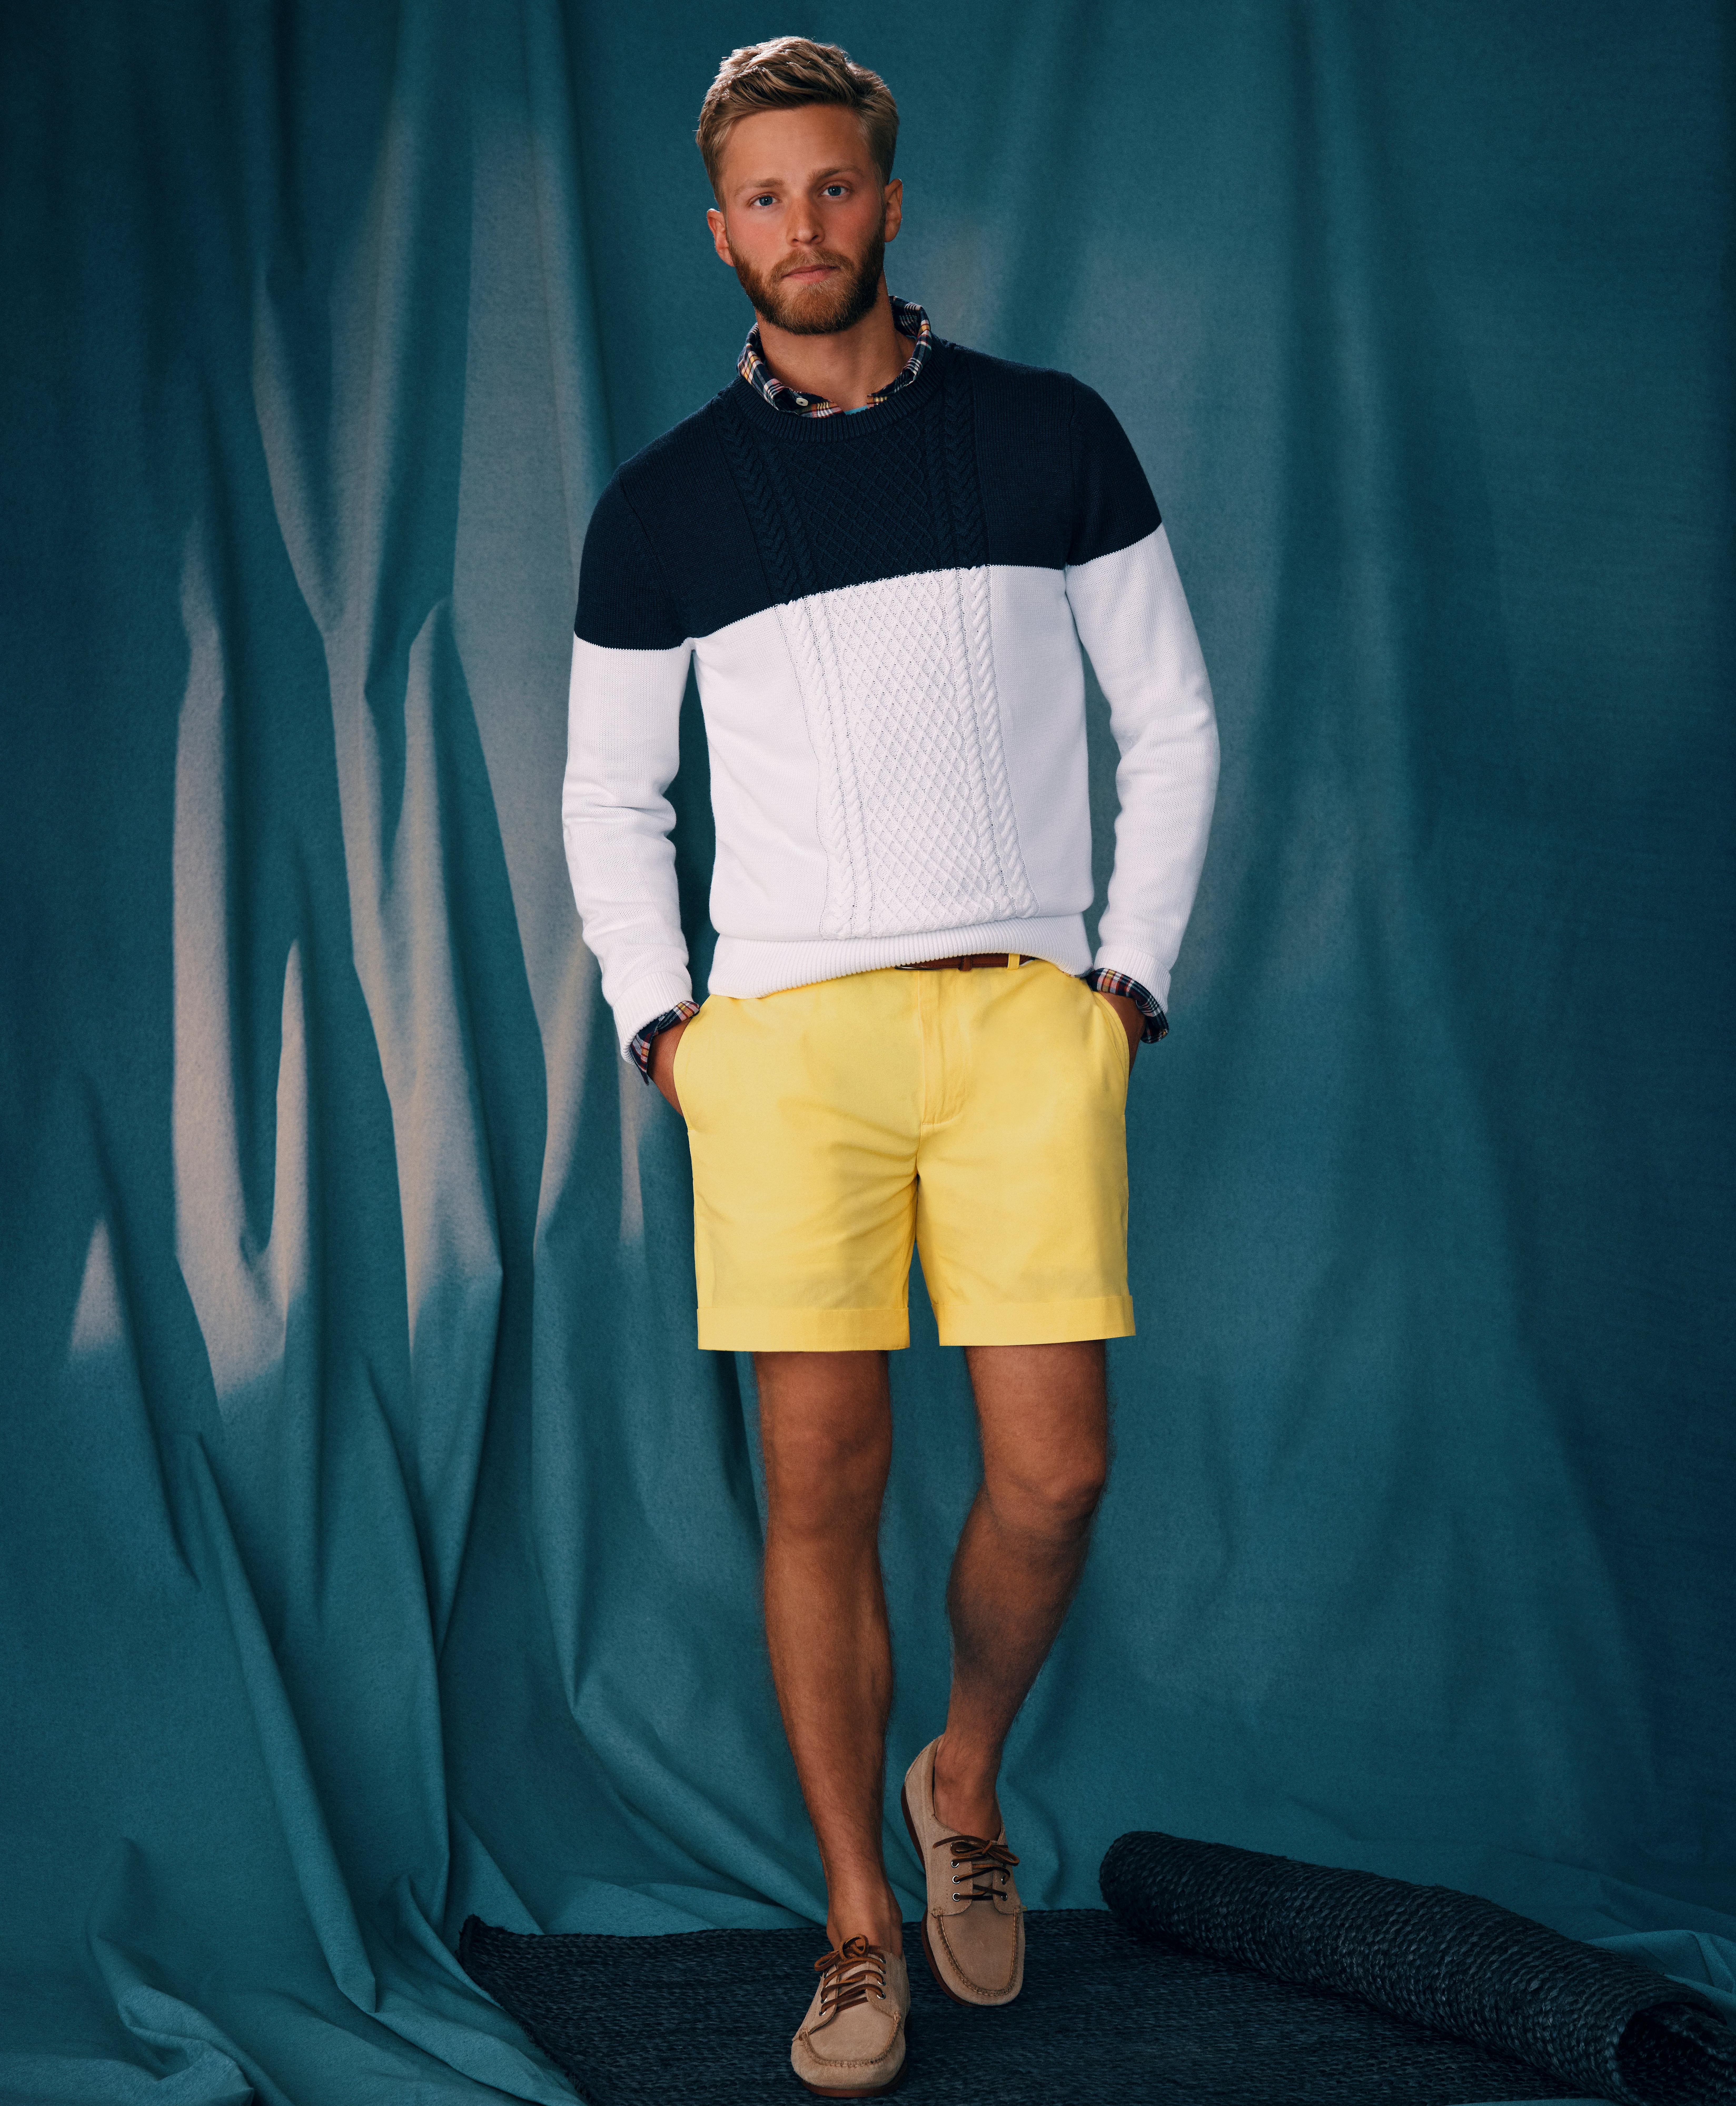 Men's plain dyed white cotton canvas Bermuda shorts